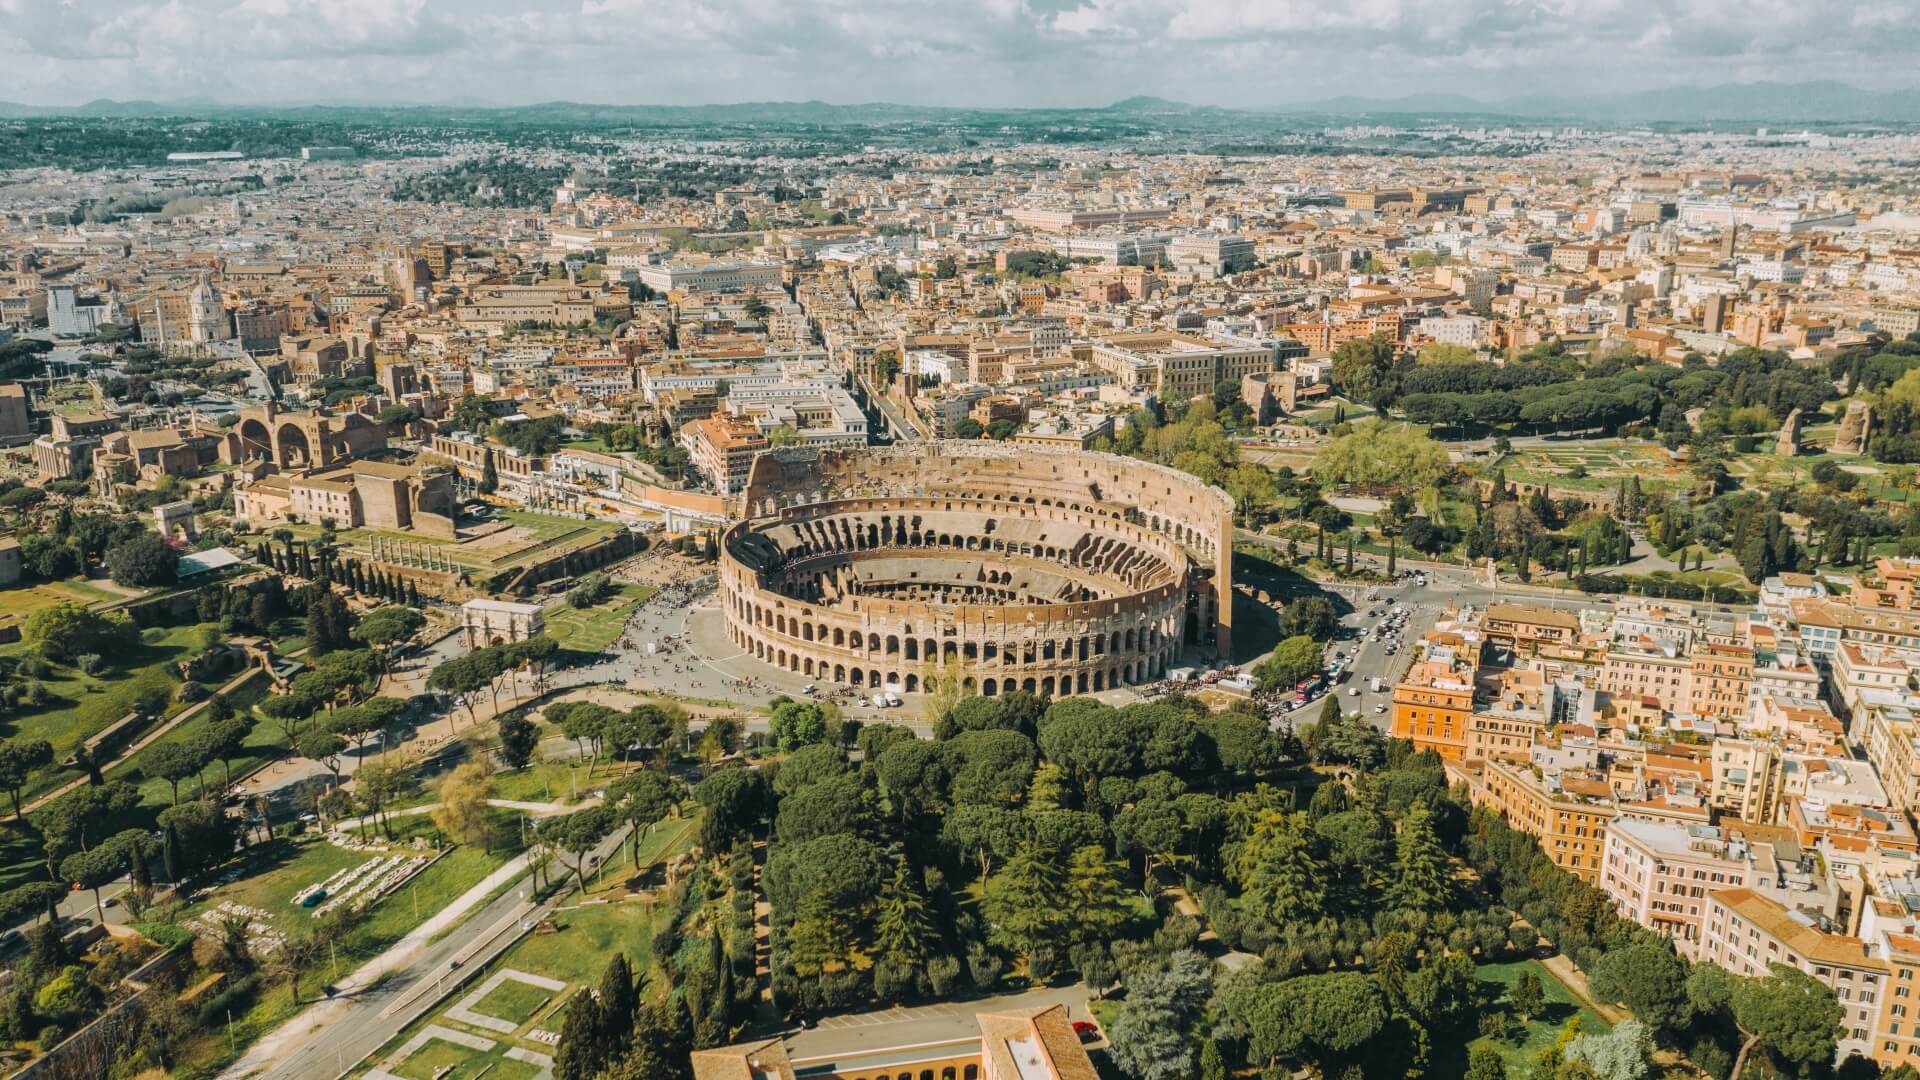 Historical Rome